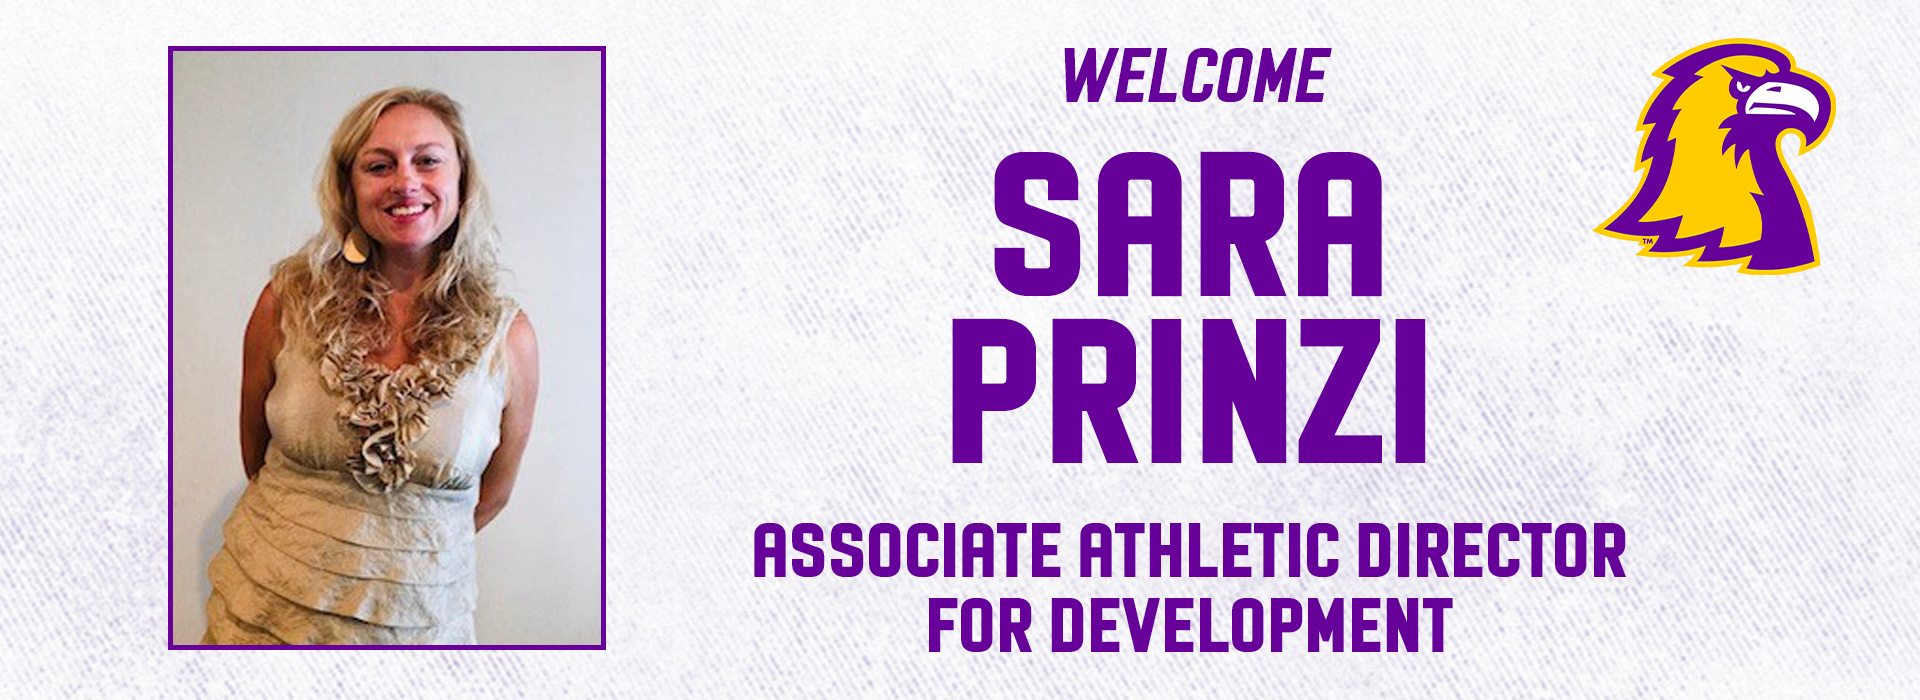 Sara Prinzi joins Tech Athletics as associate athletic director for development